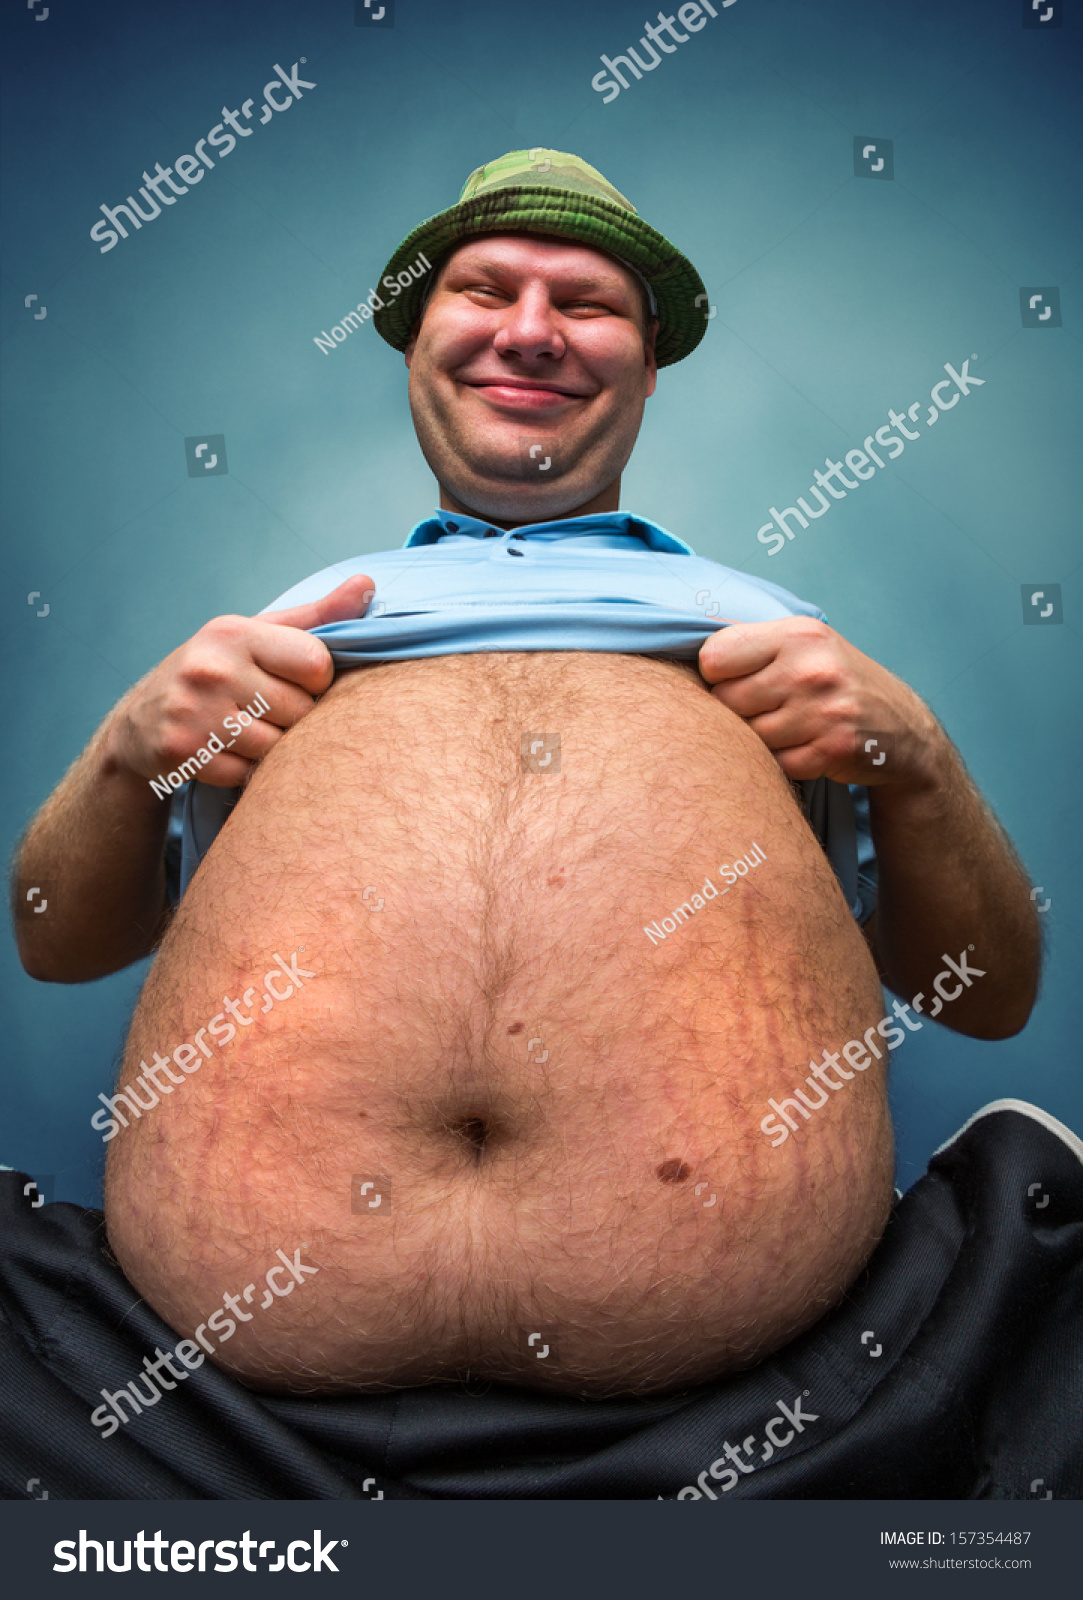 Fat Man Image 89